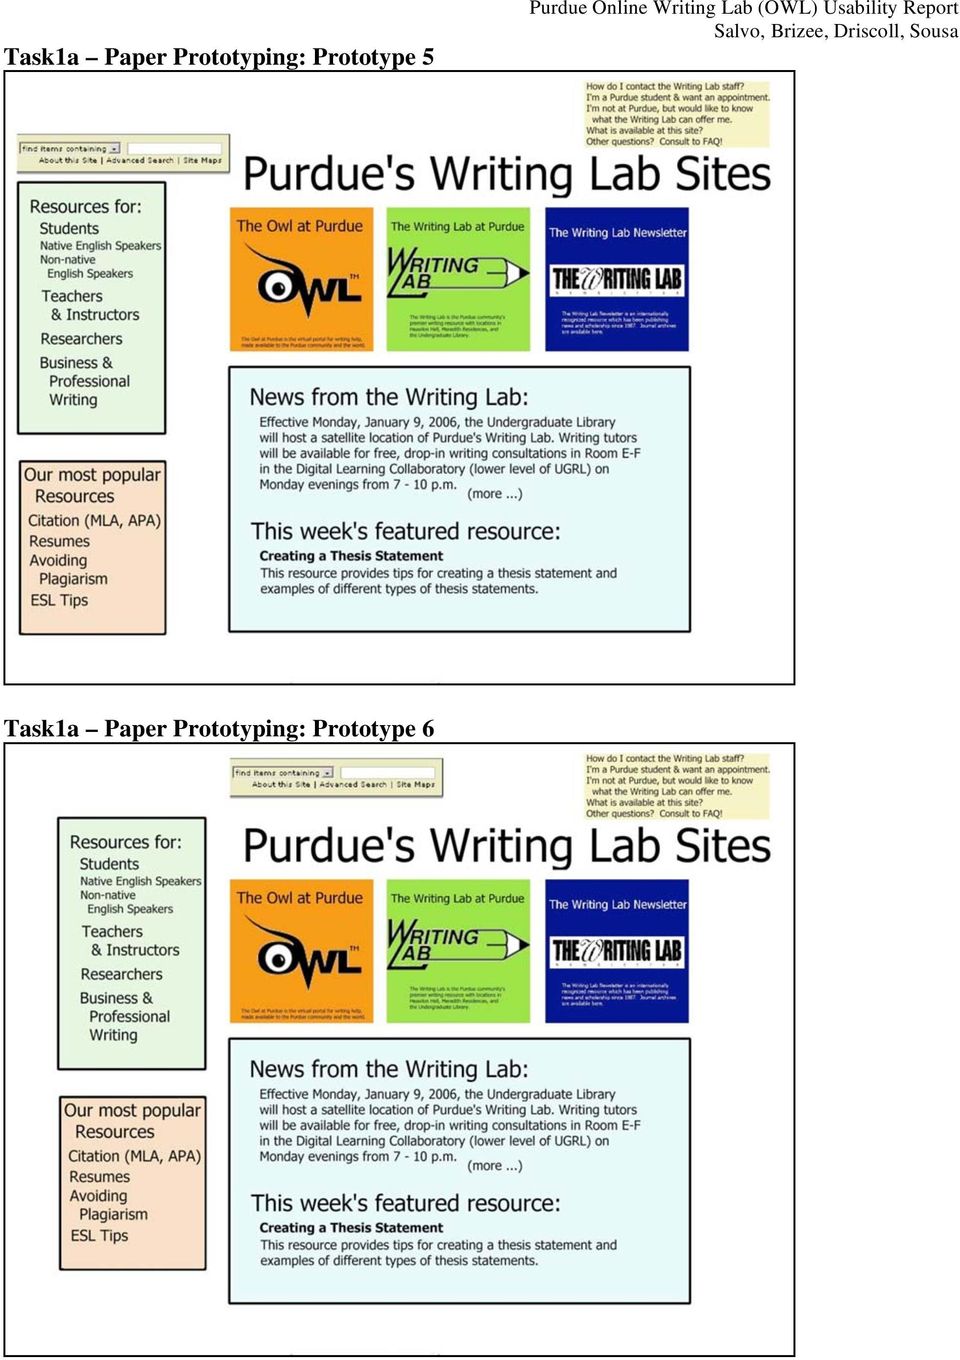 Writing Lab (OWL) Usability